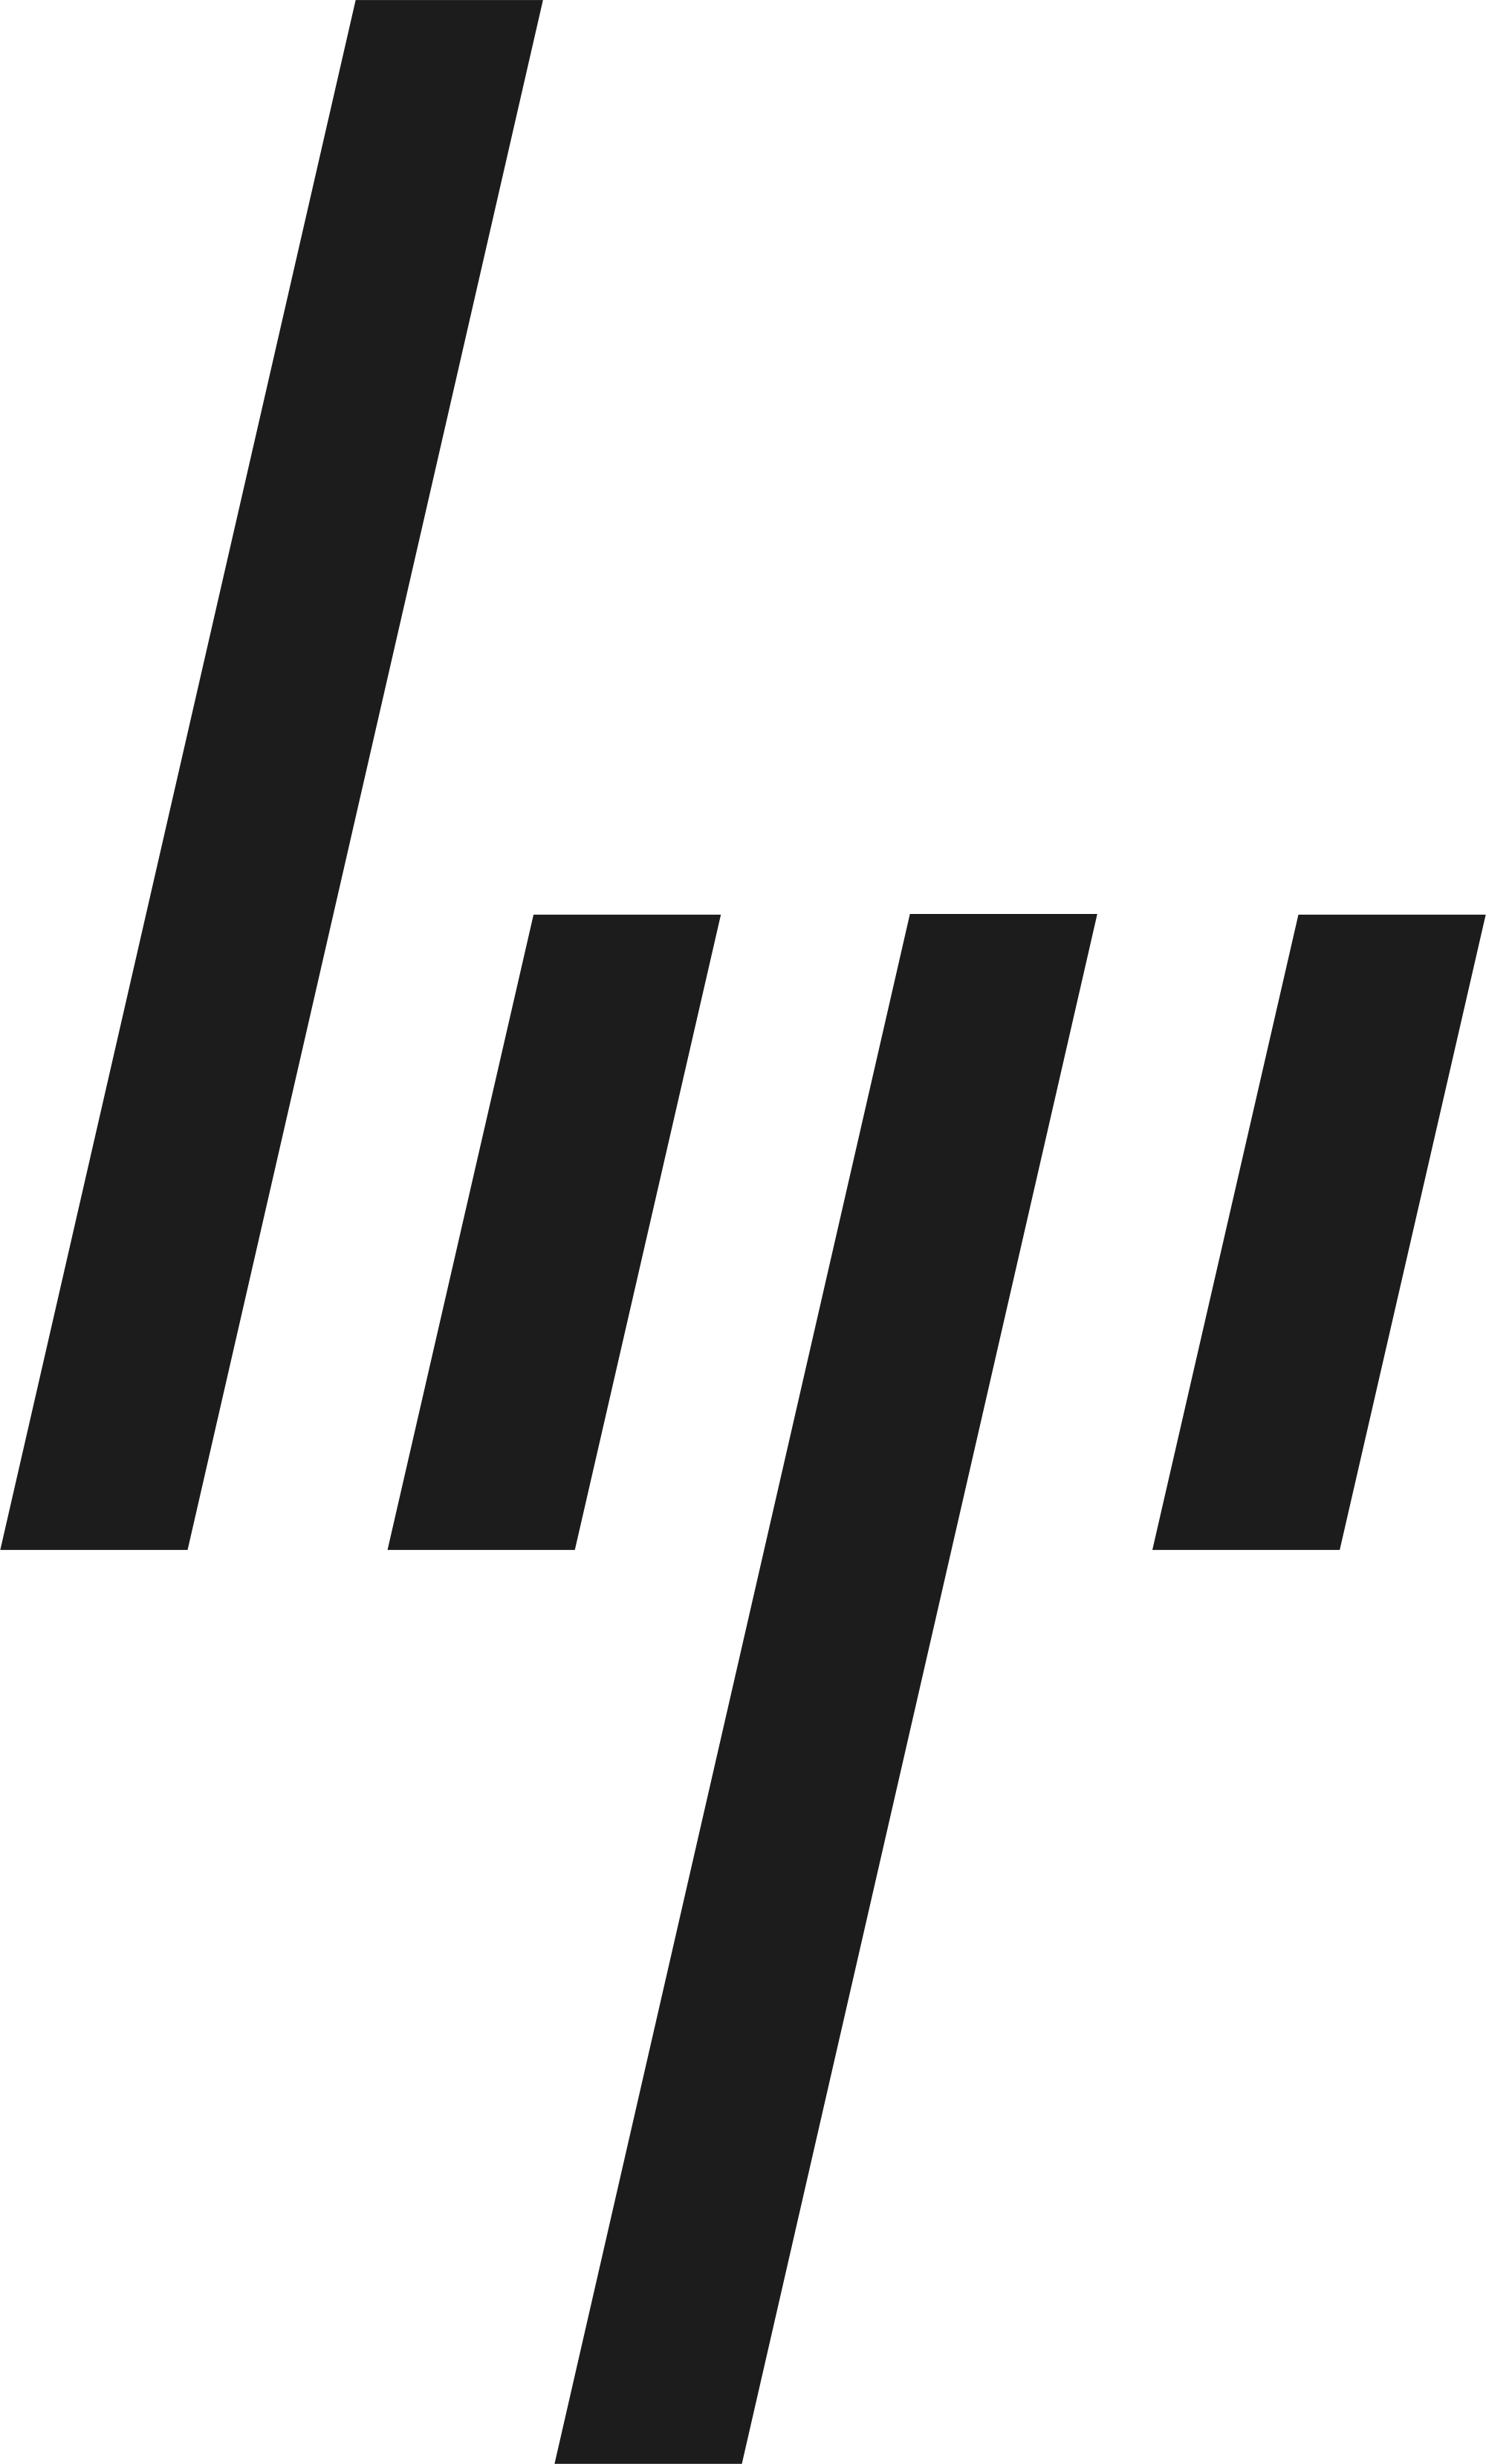 HP Logo - Image - Hp alt 2016.svg.png | Logopedia | FANDOM powered by Wikia